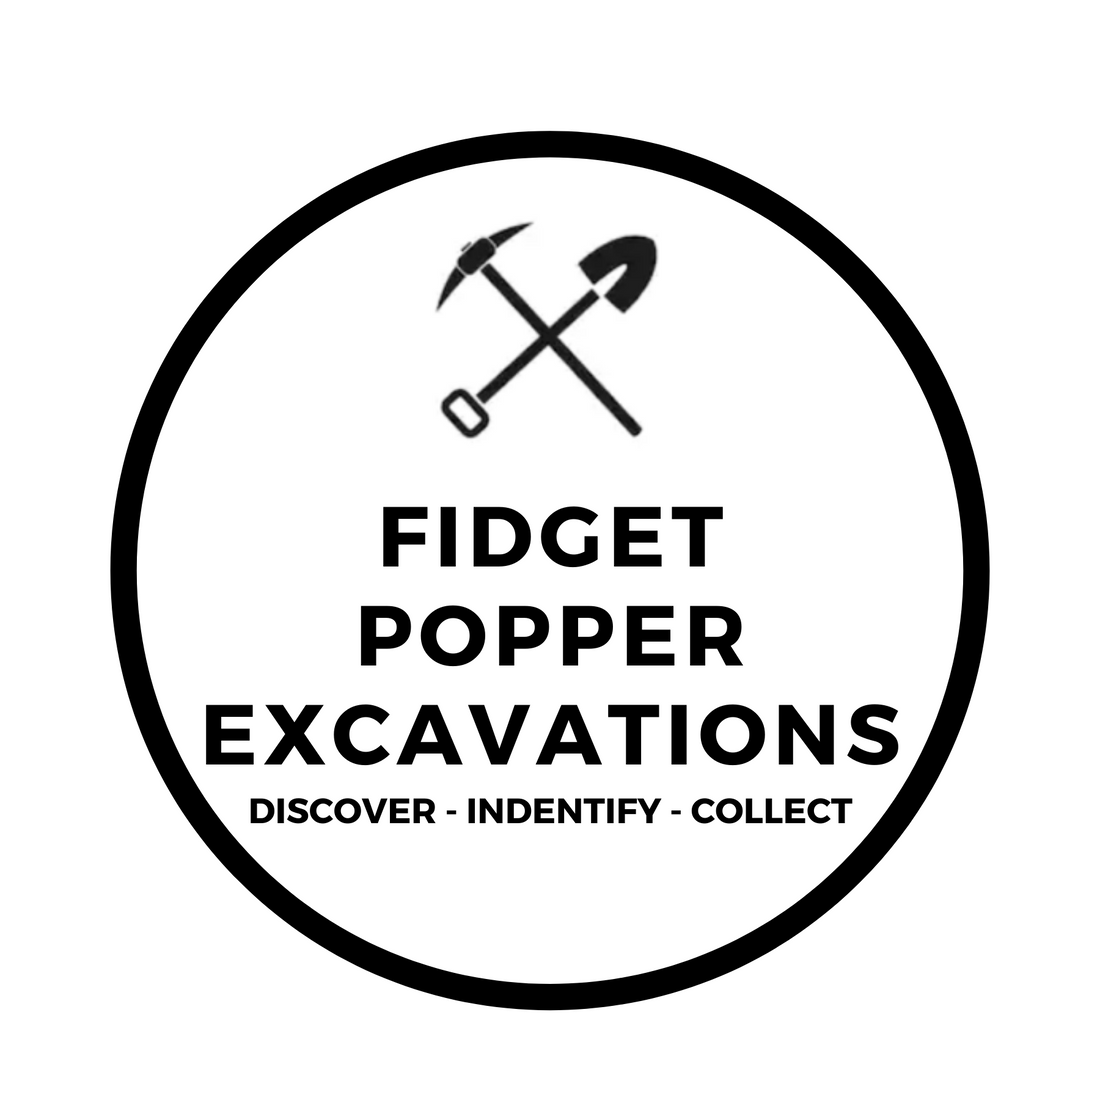 FIDGET POPPER EXCAVATIONS